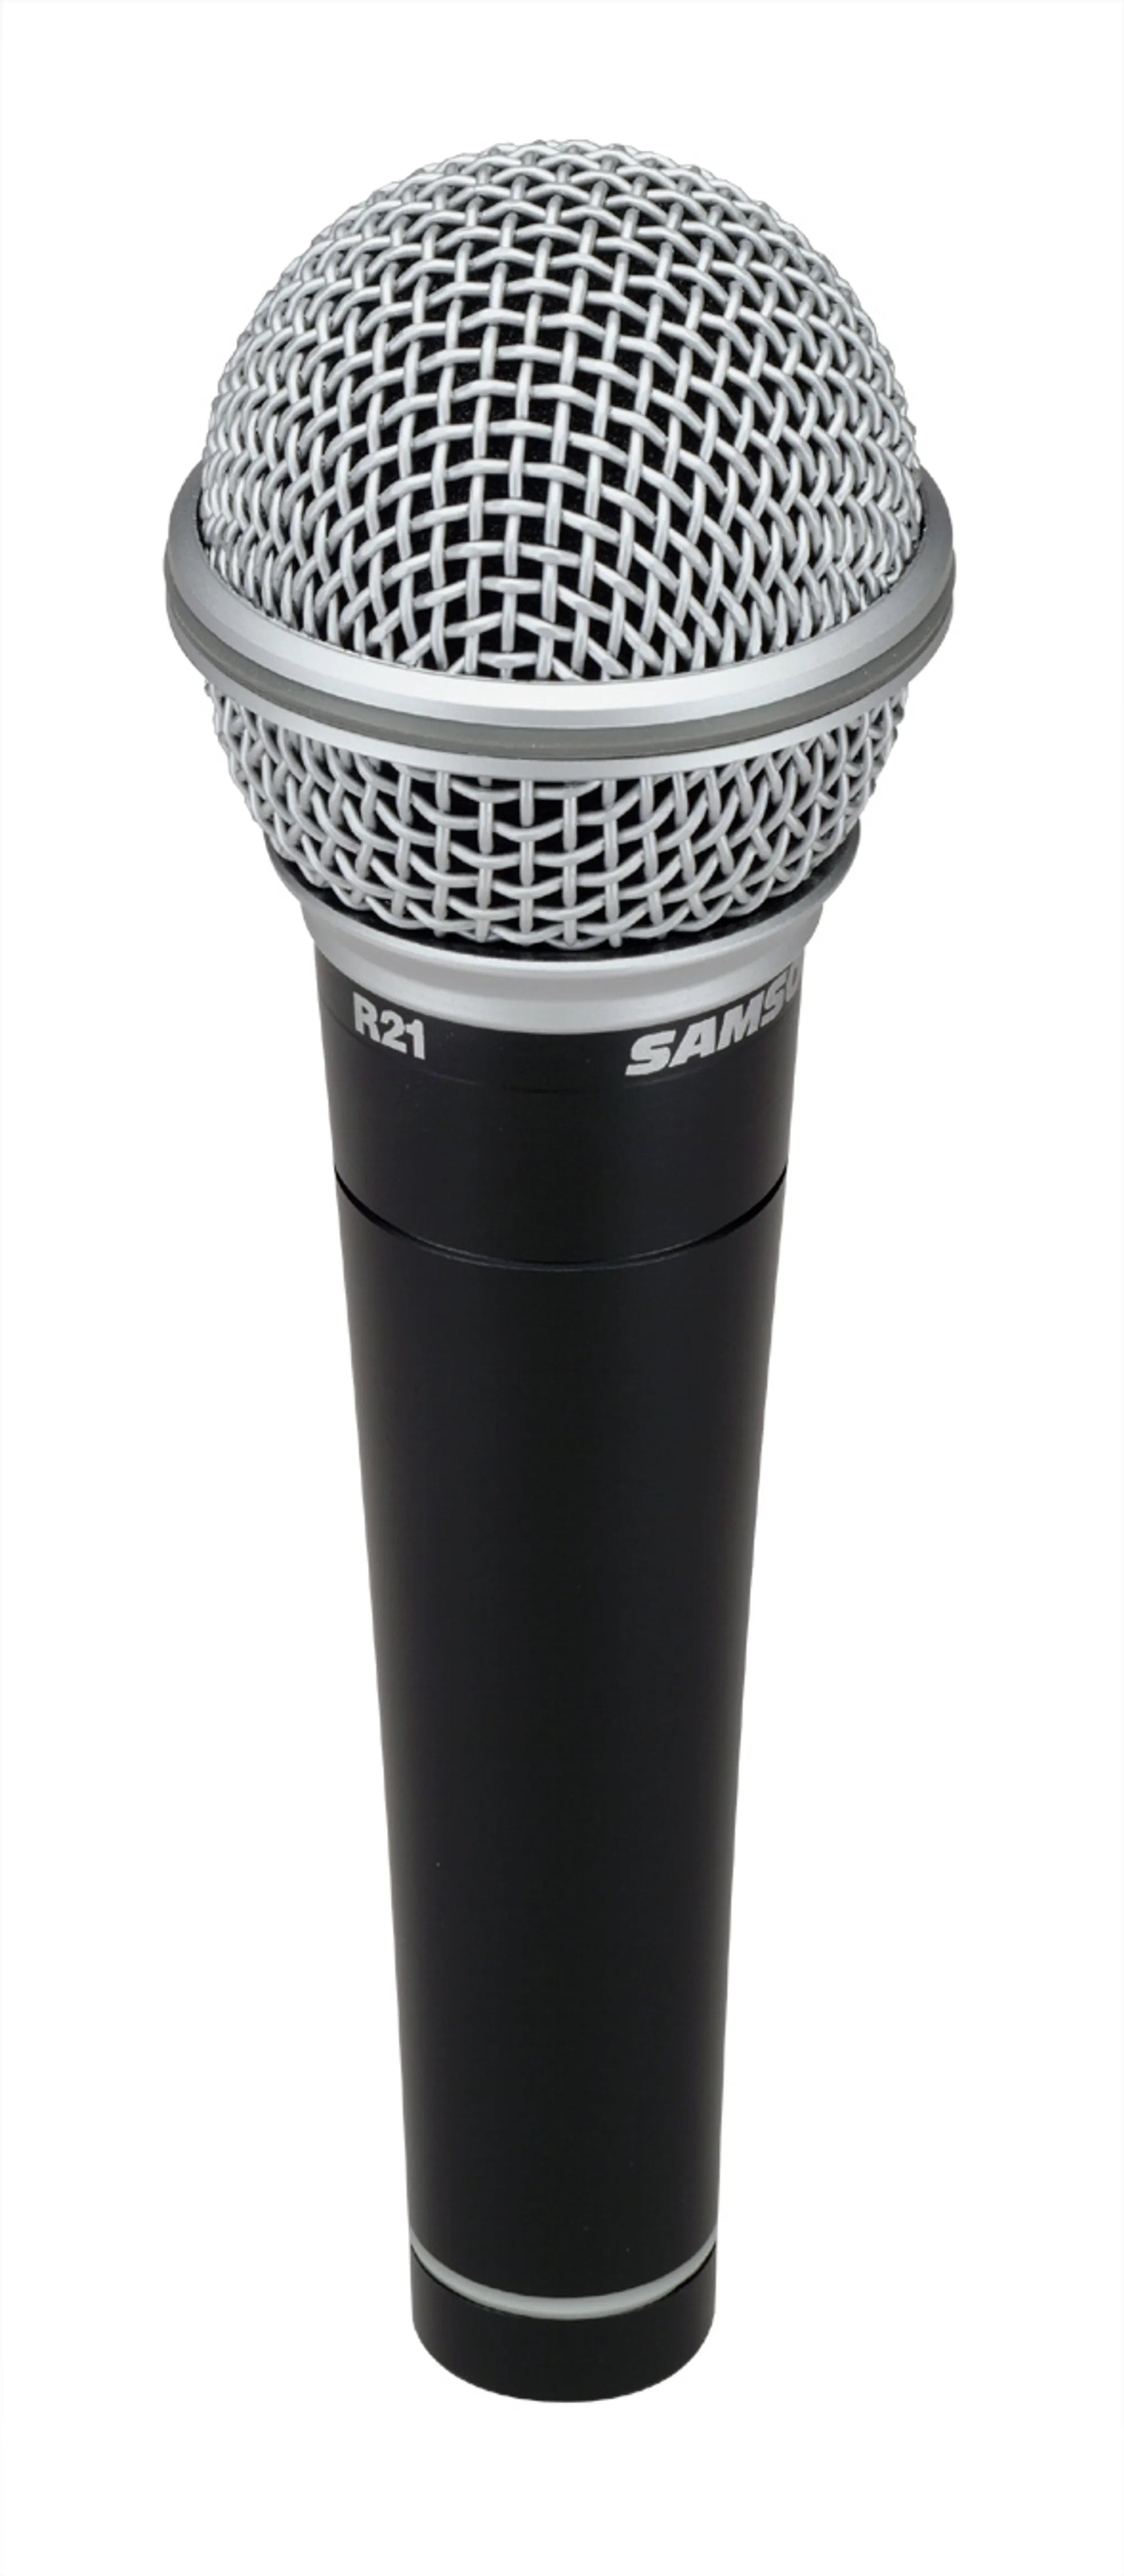 Samson R21 3-Pack Dynamic Vocal Microphones